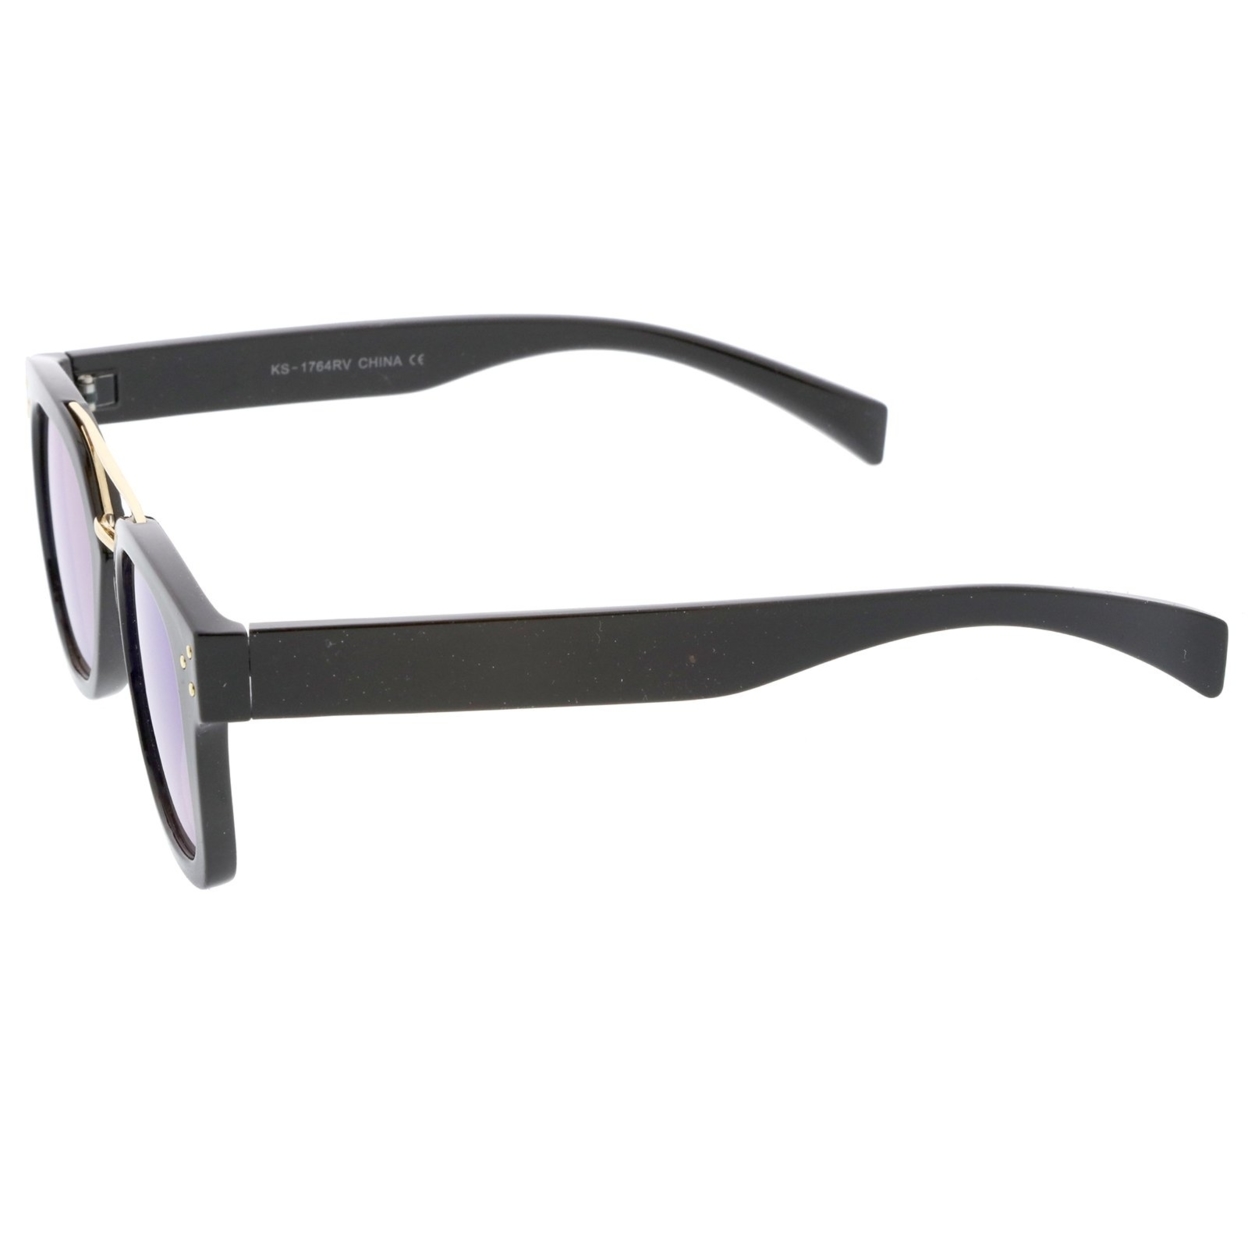 Modern Horn Rim Metal Crossbar Square Flat Mirrored Lens Aviator Sunglasses 48mm - Blue Camo / Blue Mirror